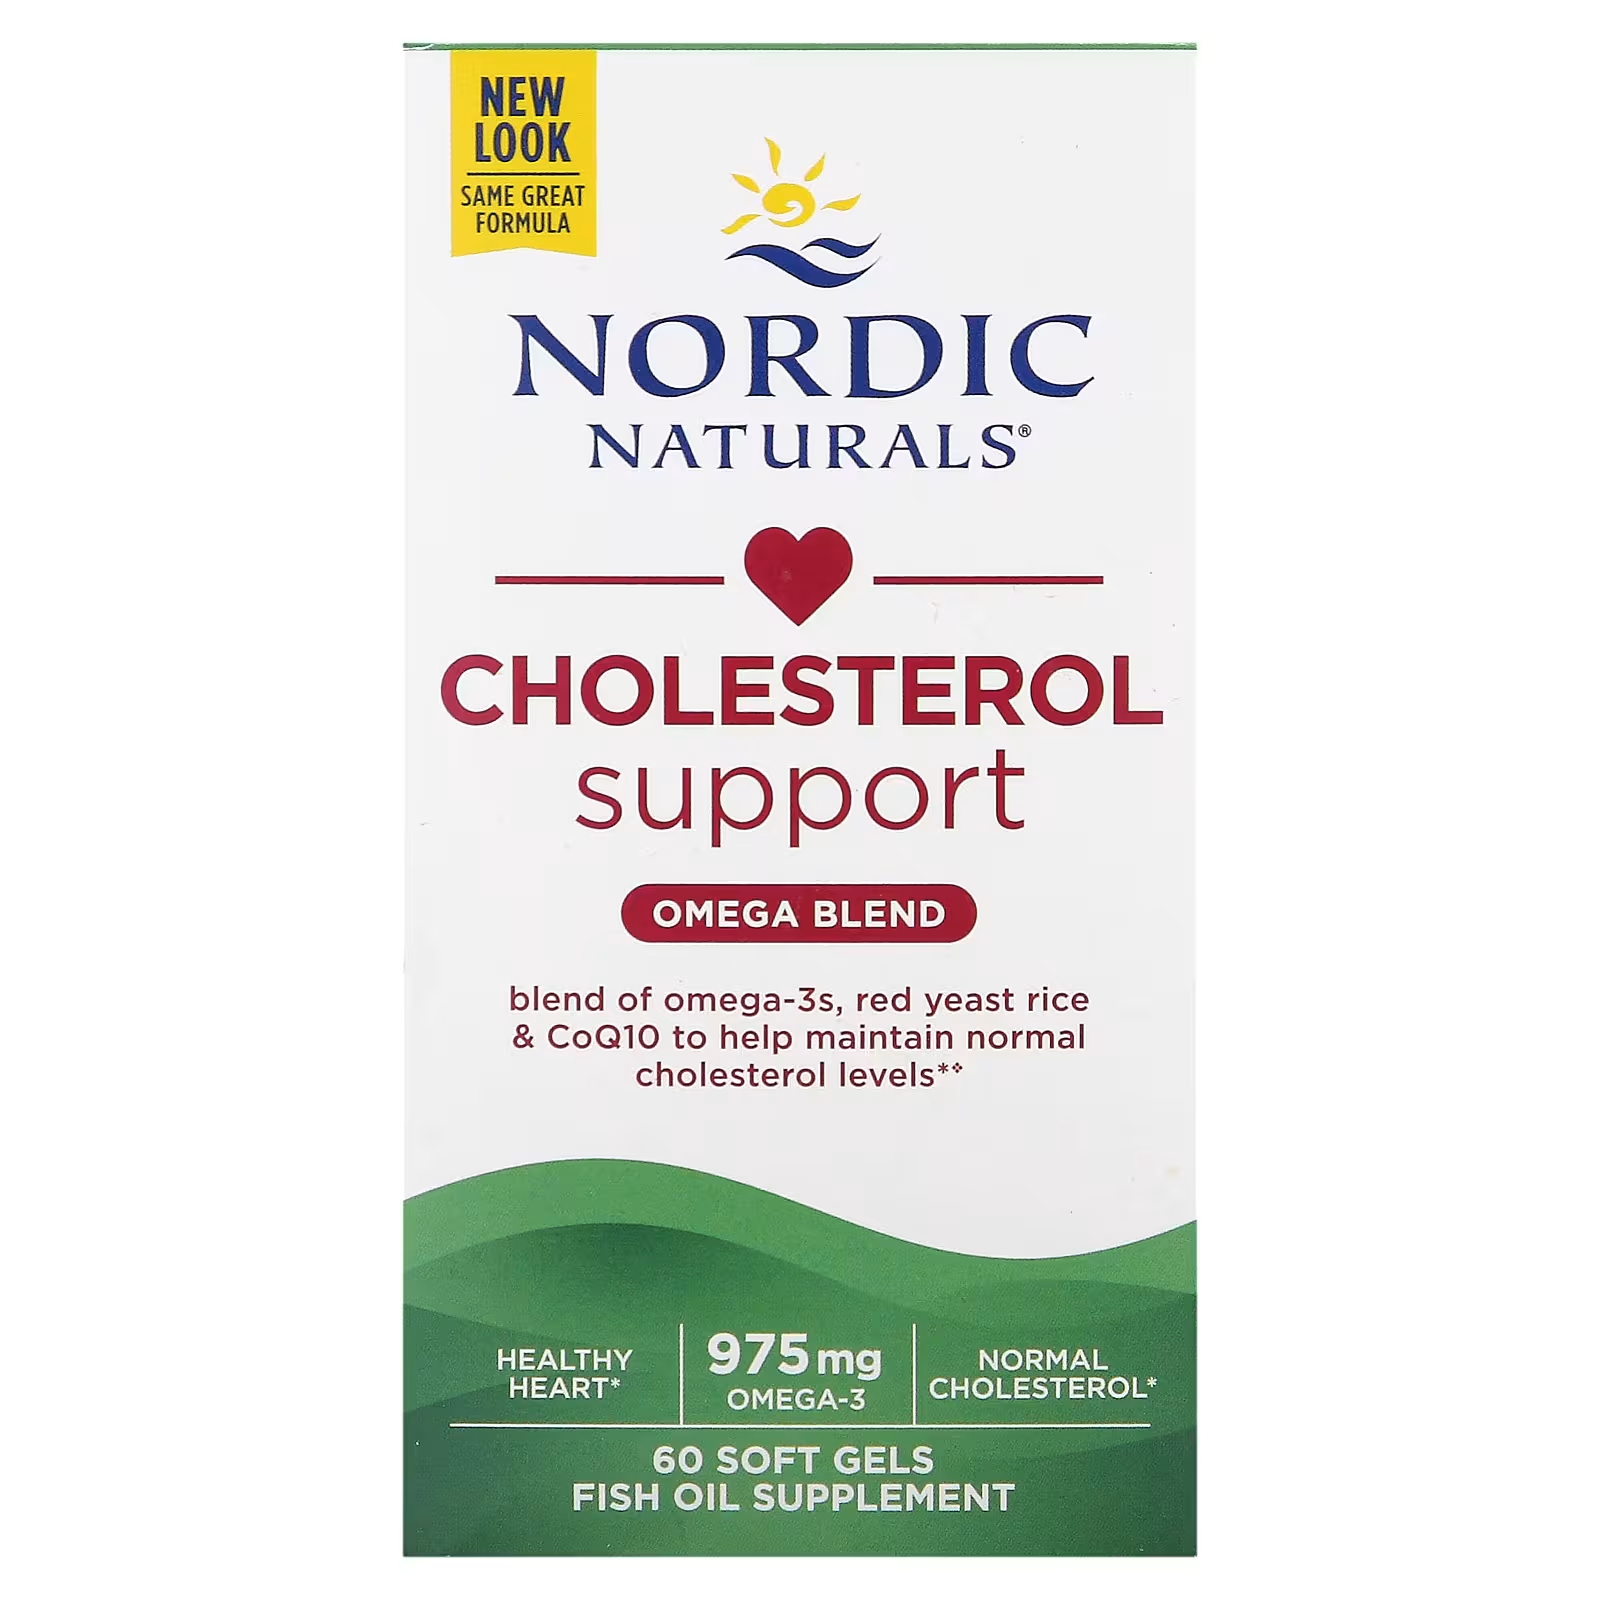 Nordic Naturals Поддержка холестерина Omega Blend 975 мг, 60 мягких гелей (325 мг на мягкую гель) nordic naturals vision support omega blend 1460 мг 60 мягких таблеток 730 мг на мягкую гель